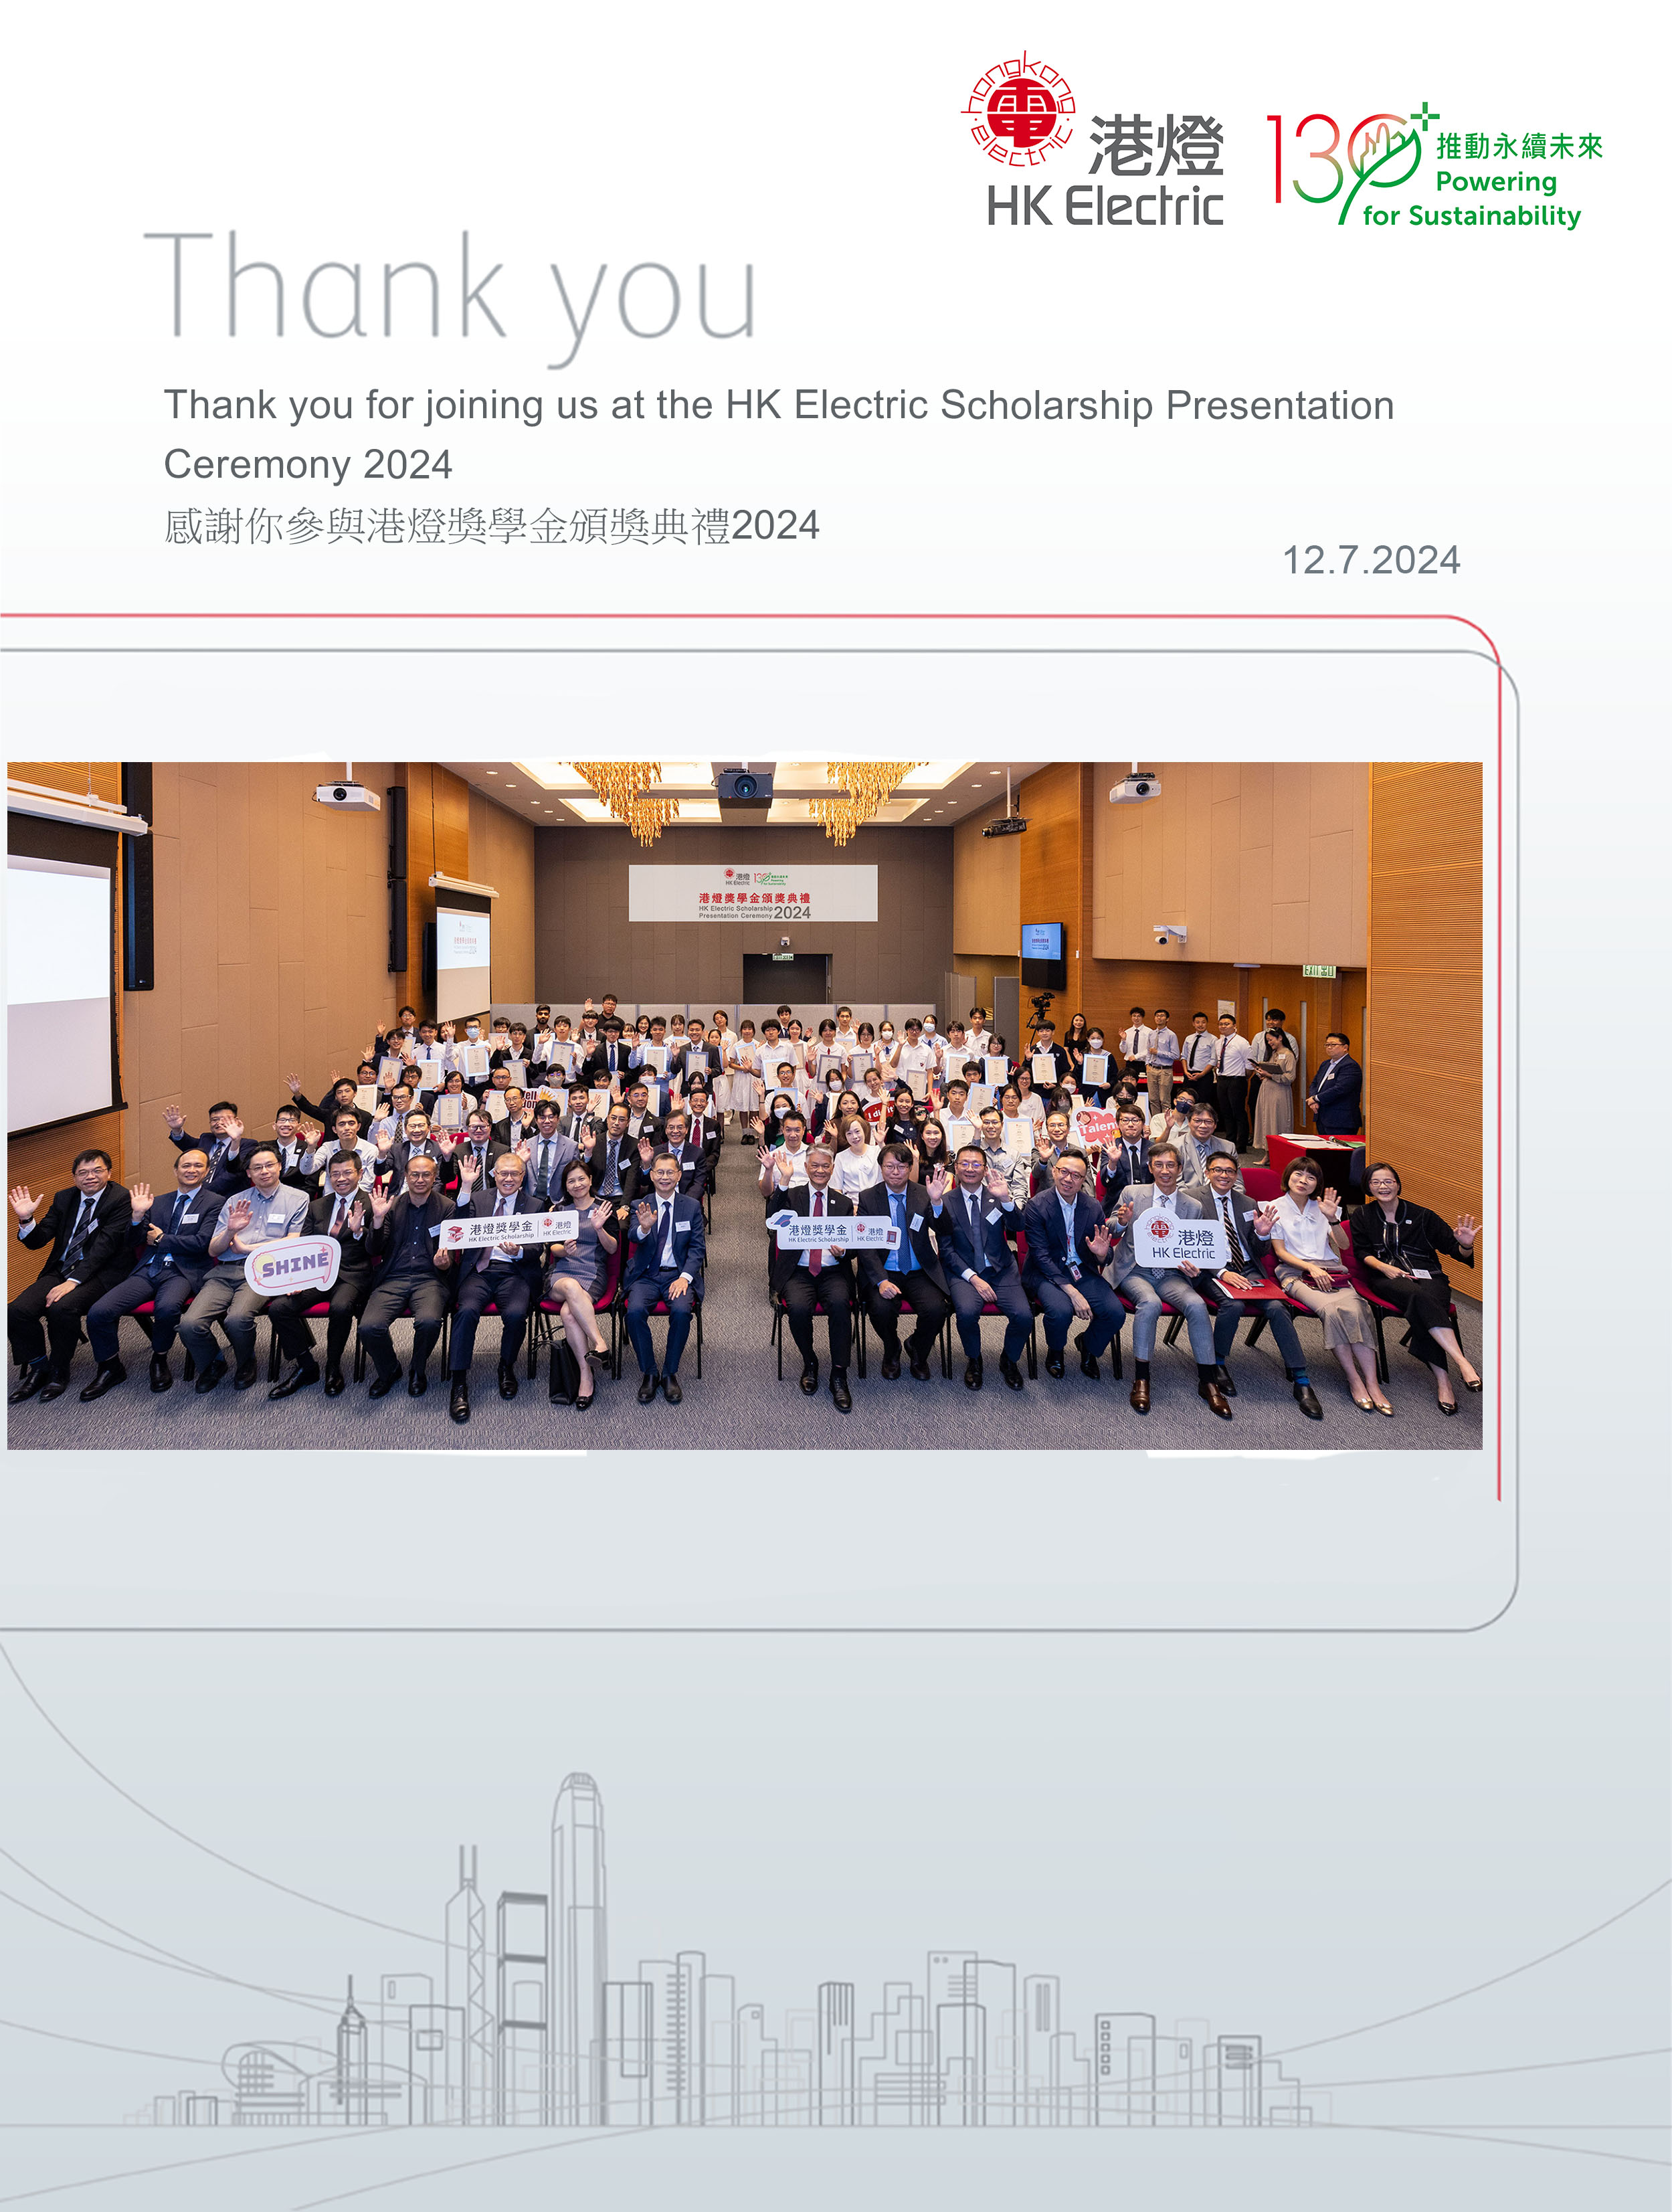 HK Electric Scholarships